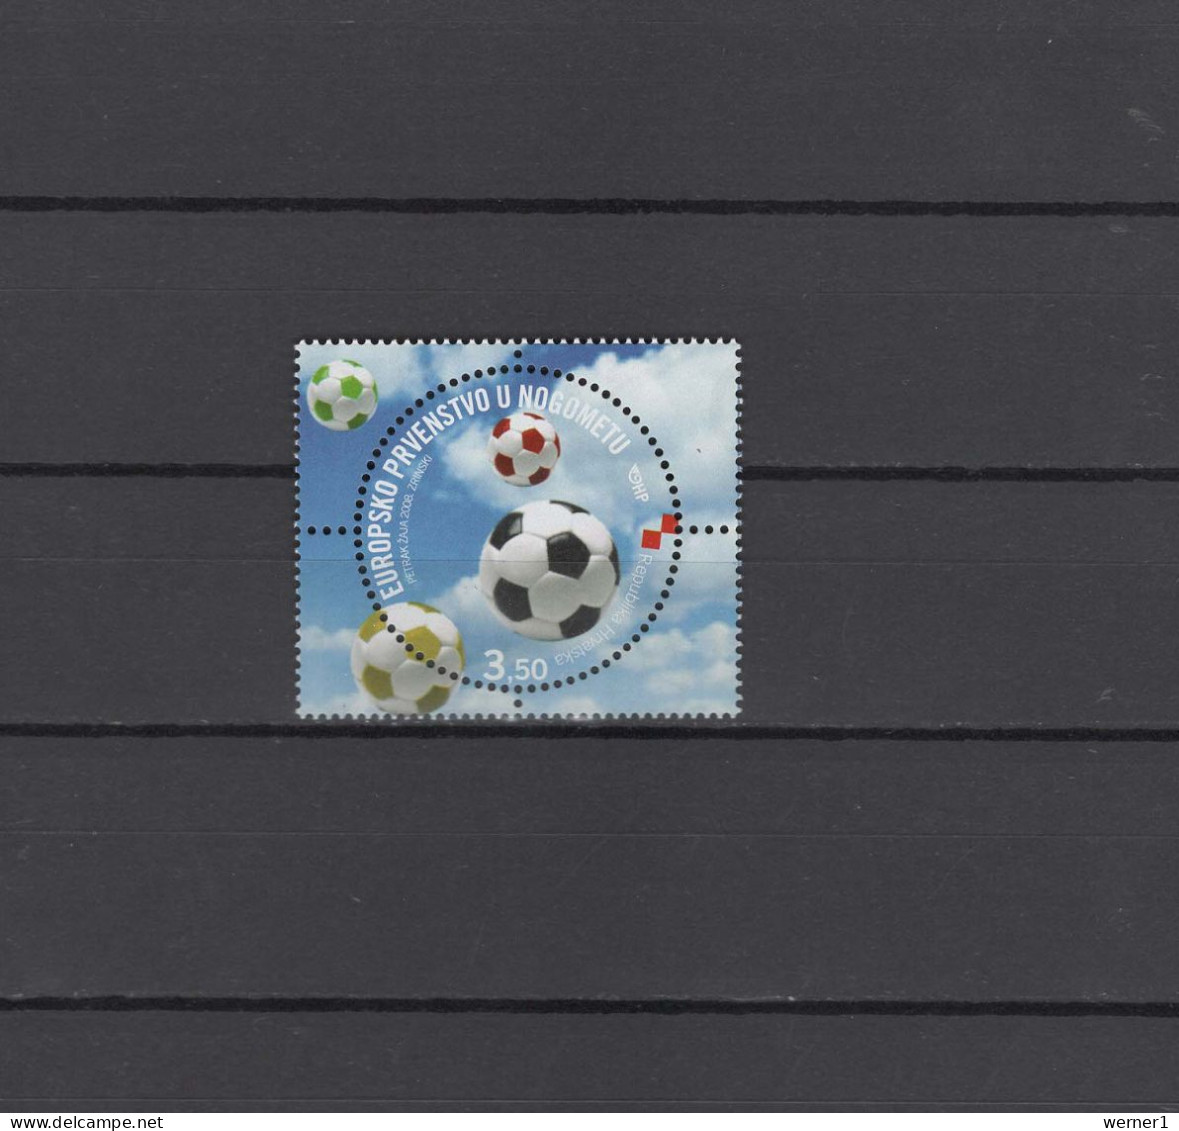 Croatia 2008 Football Soccer European Championship Stamp MNH - Europei Di Calcio (UEFA)